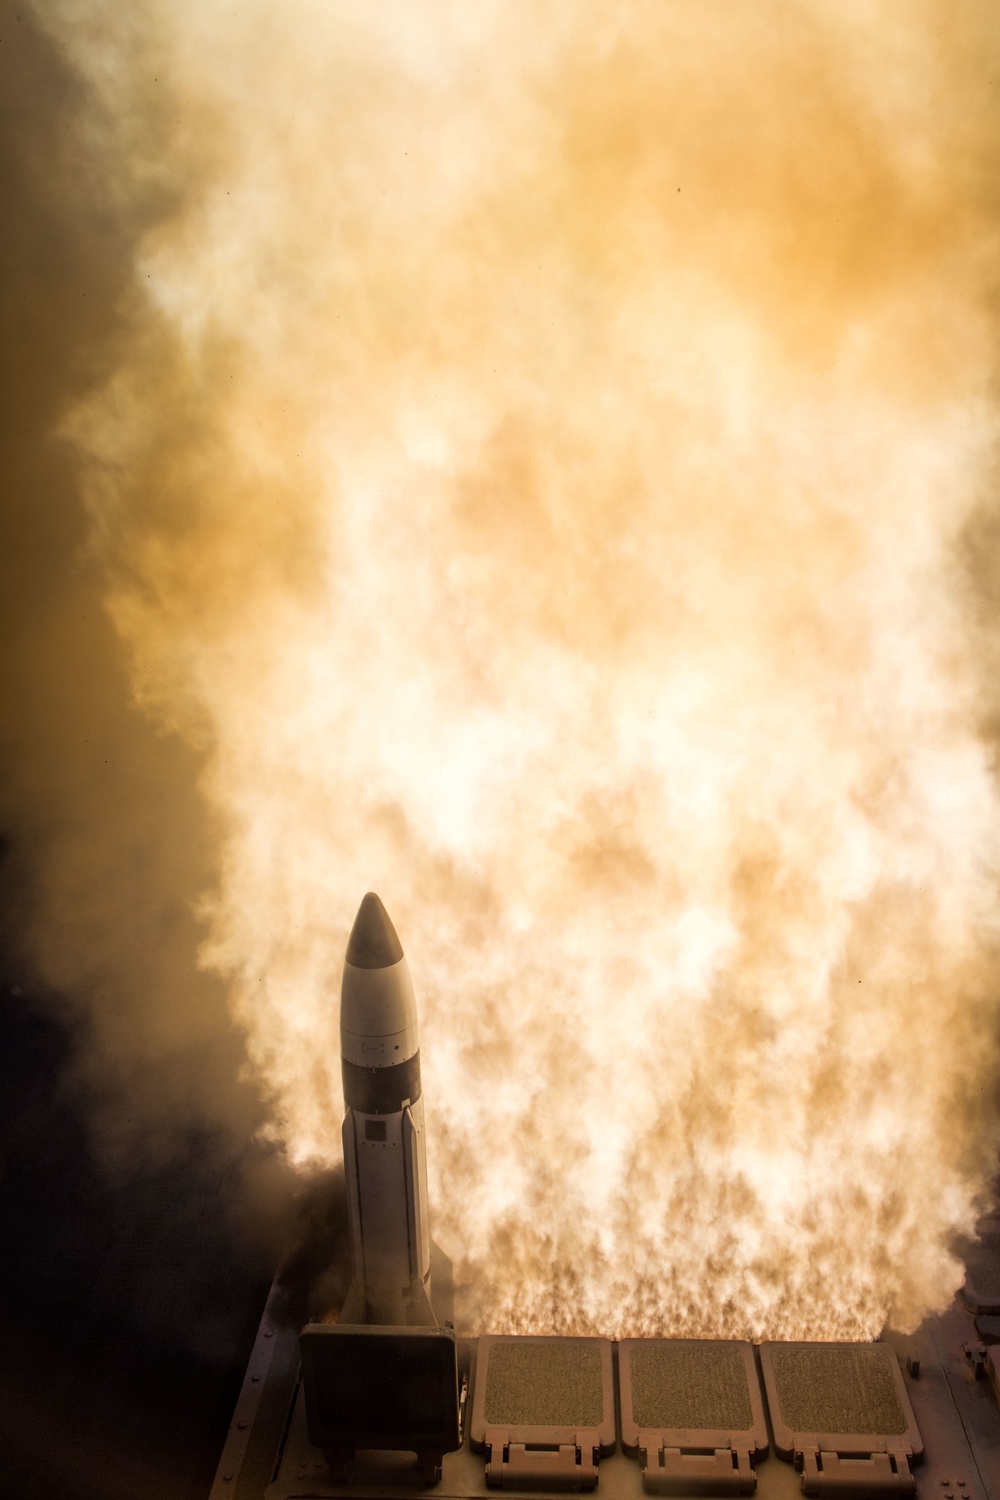 FTM-25 missile defense flight test